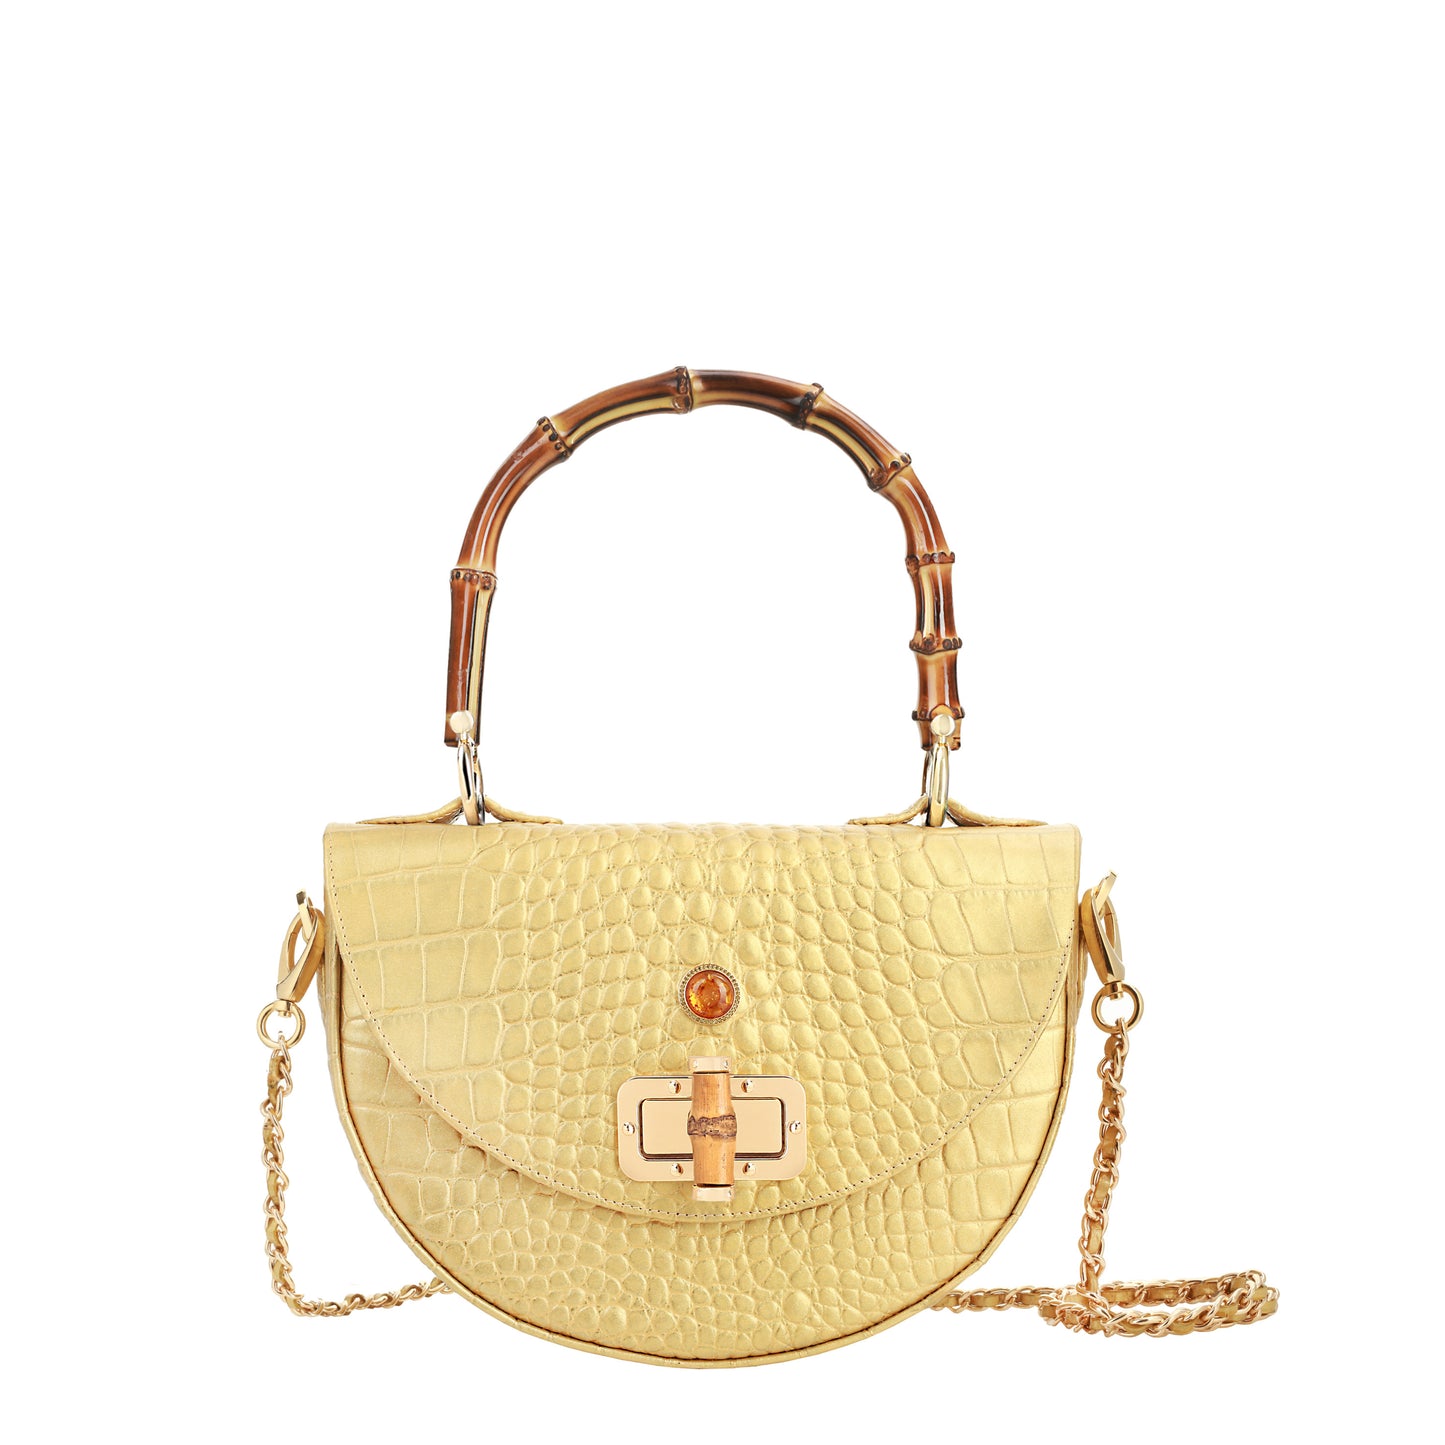 NEFRE GOLD PANE women's handbag No1